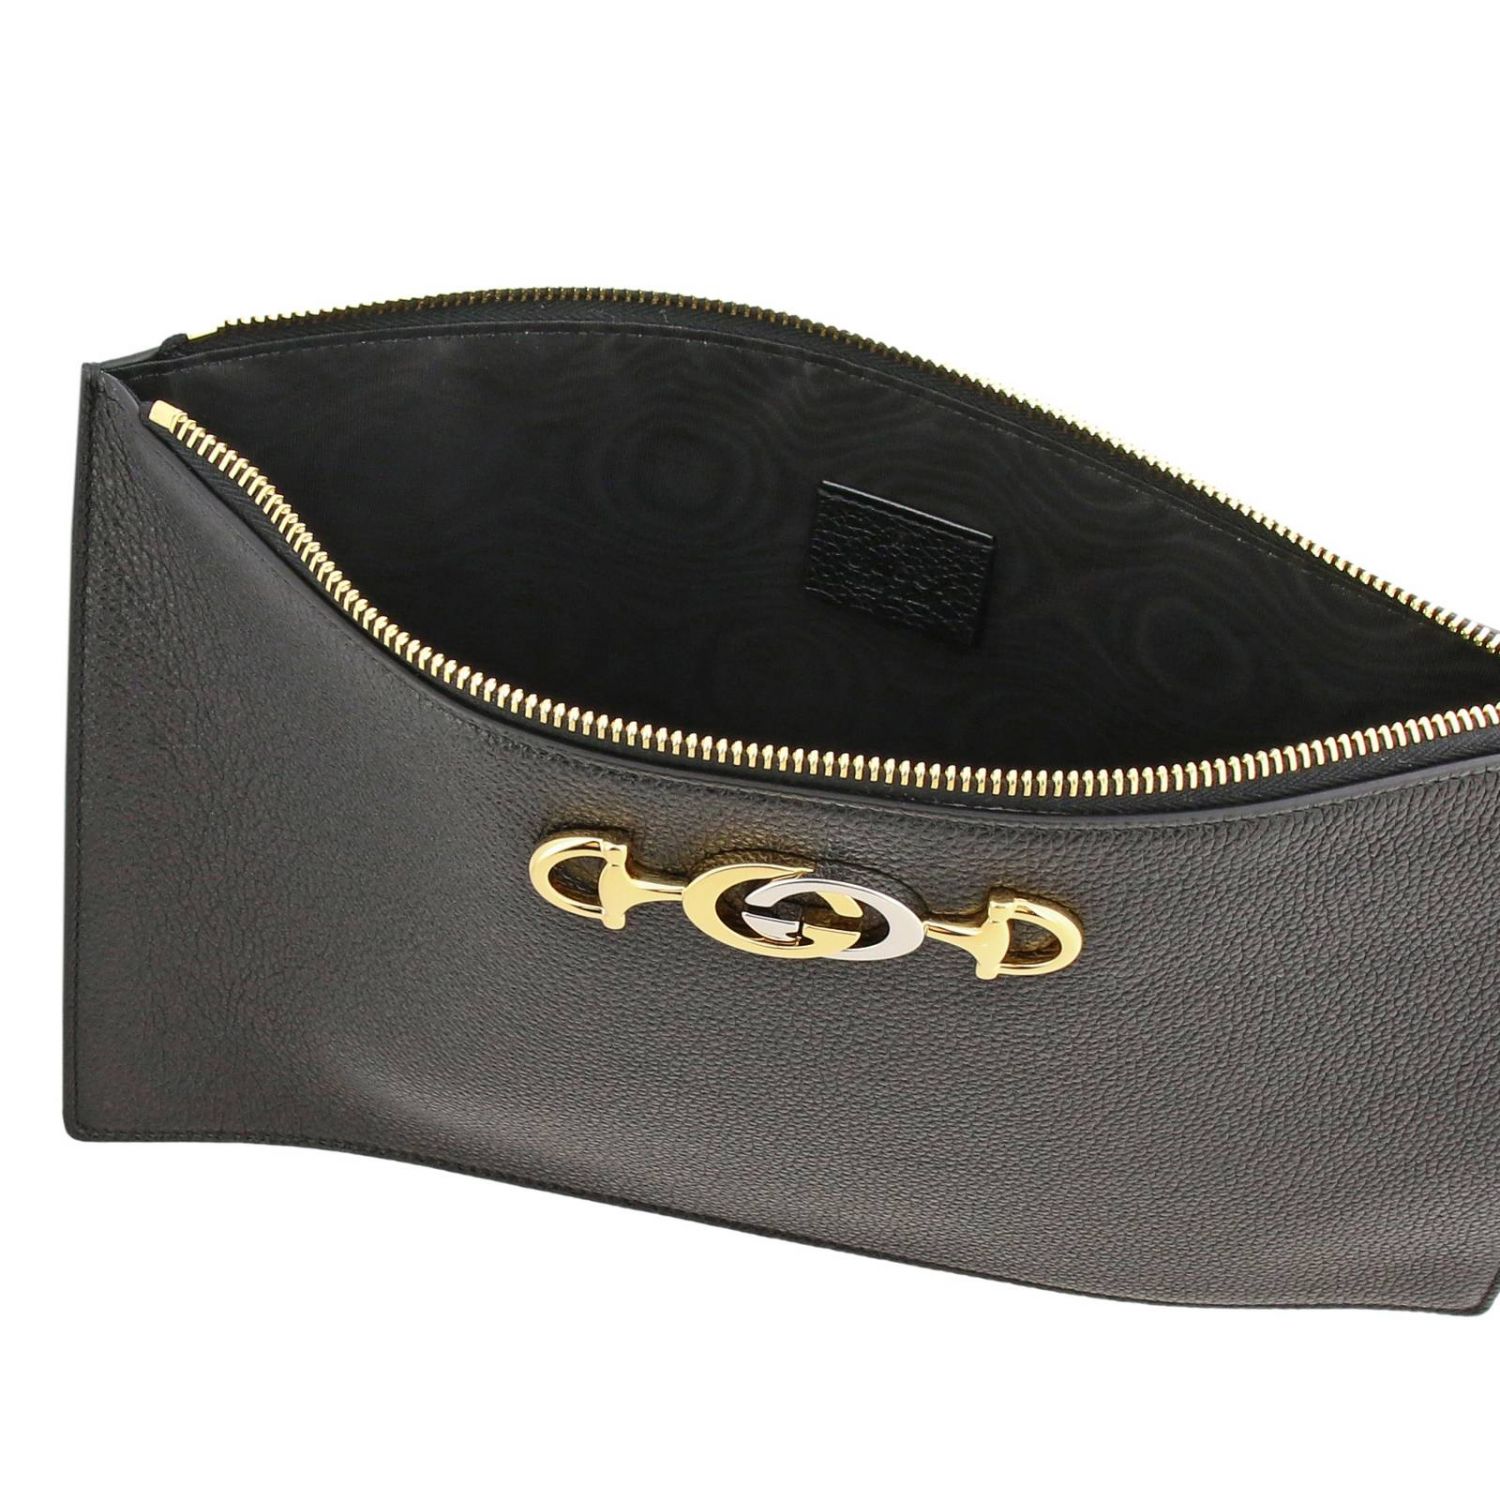 Zucci Gucci leather clutch bag with Gucci new logo | Clutch Gucci Women Black | Clutch Gucci ...